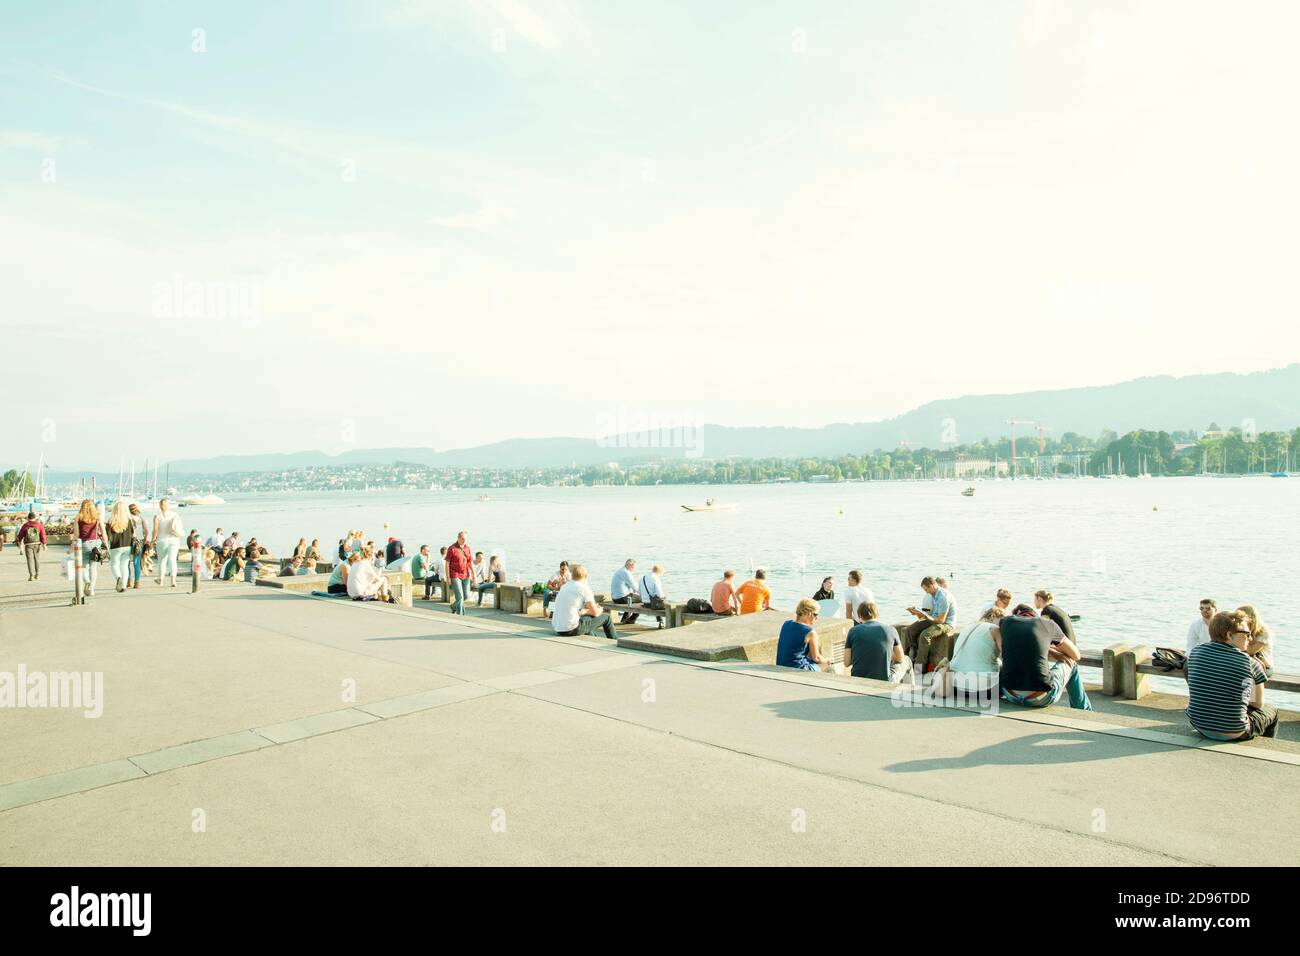 Zurich, Switzerland - July 23, 2014: People socializing on the bank of Zurich lake in Switzerland Stock Photo